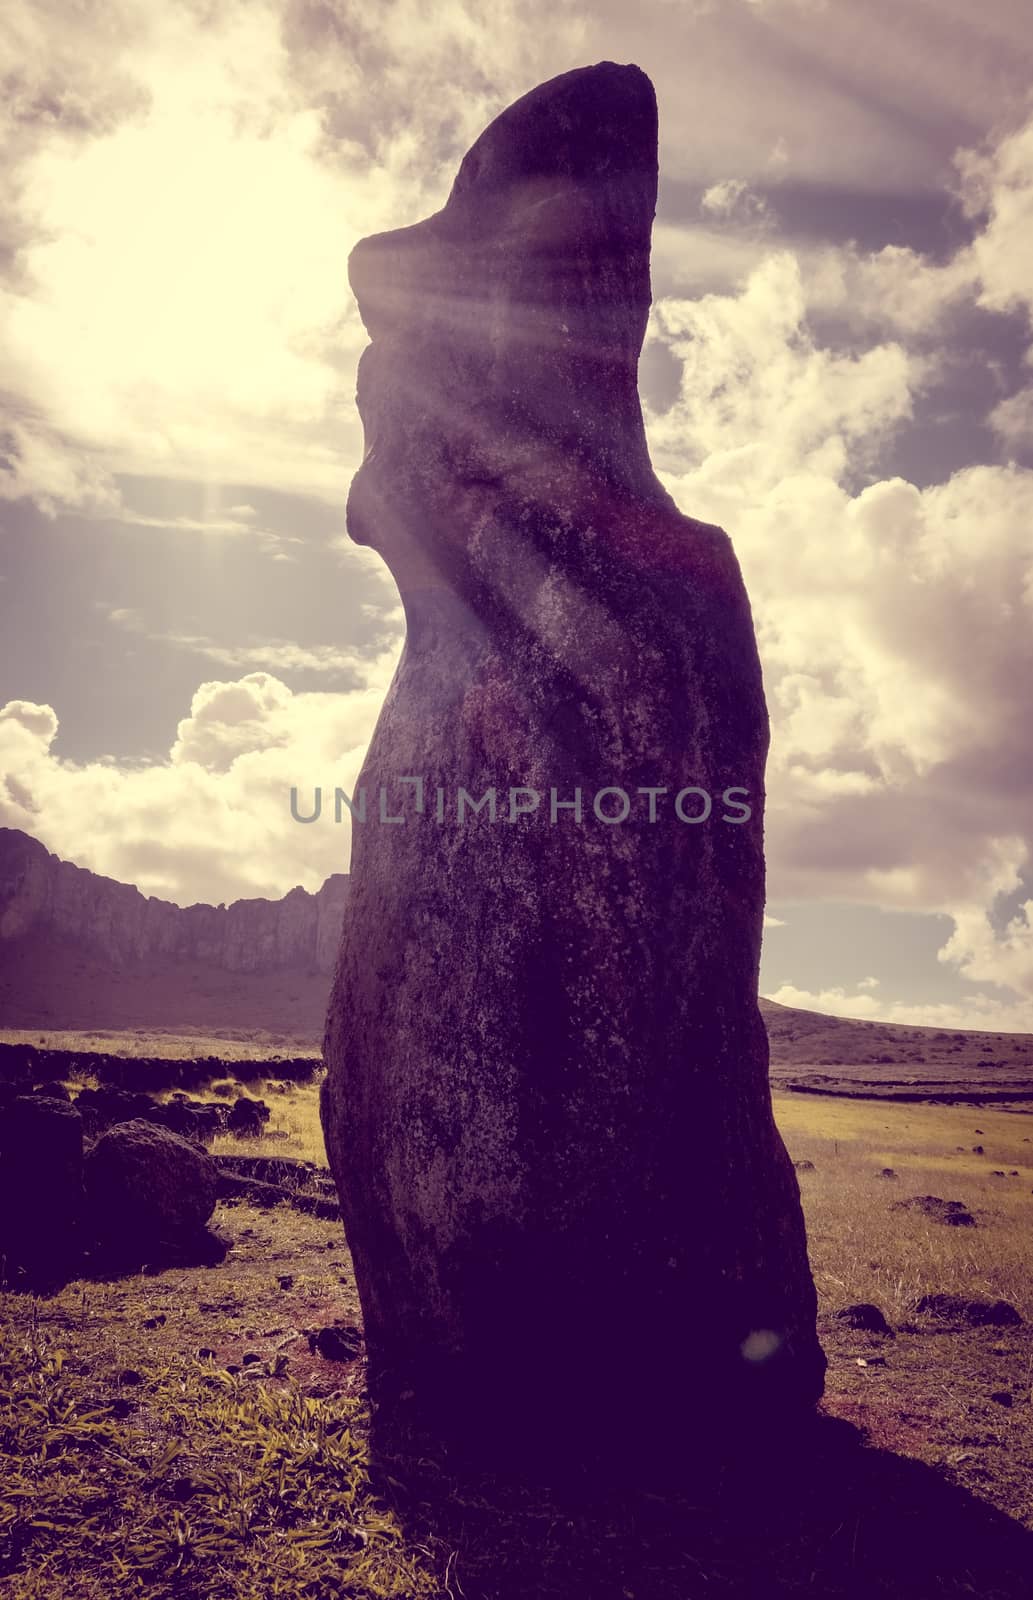 Moai statue, ahu Tongariki, easter island by daboost